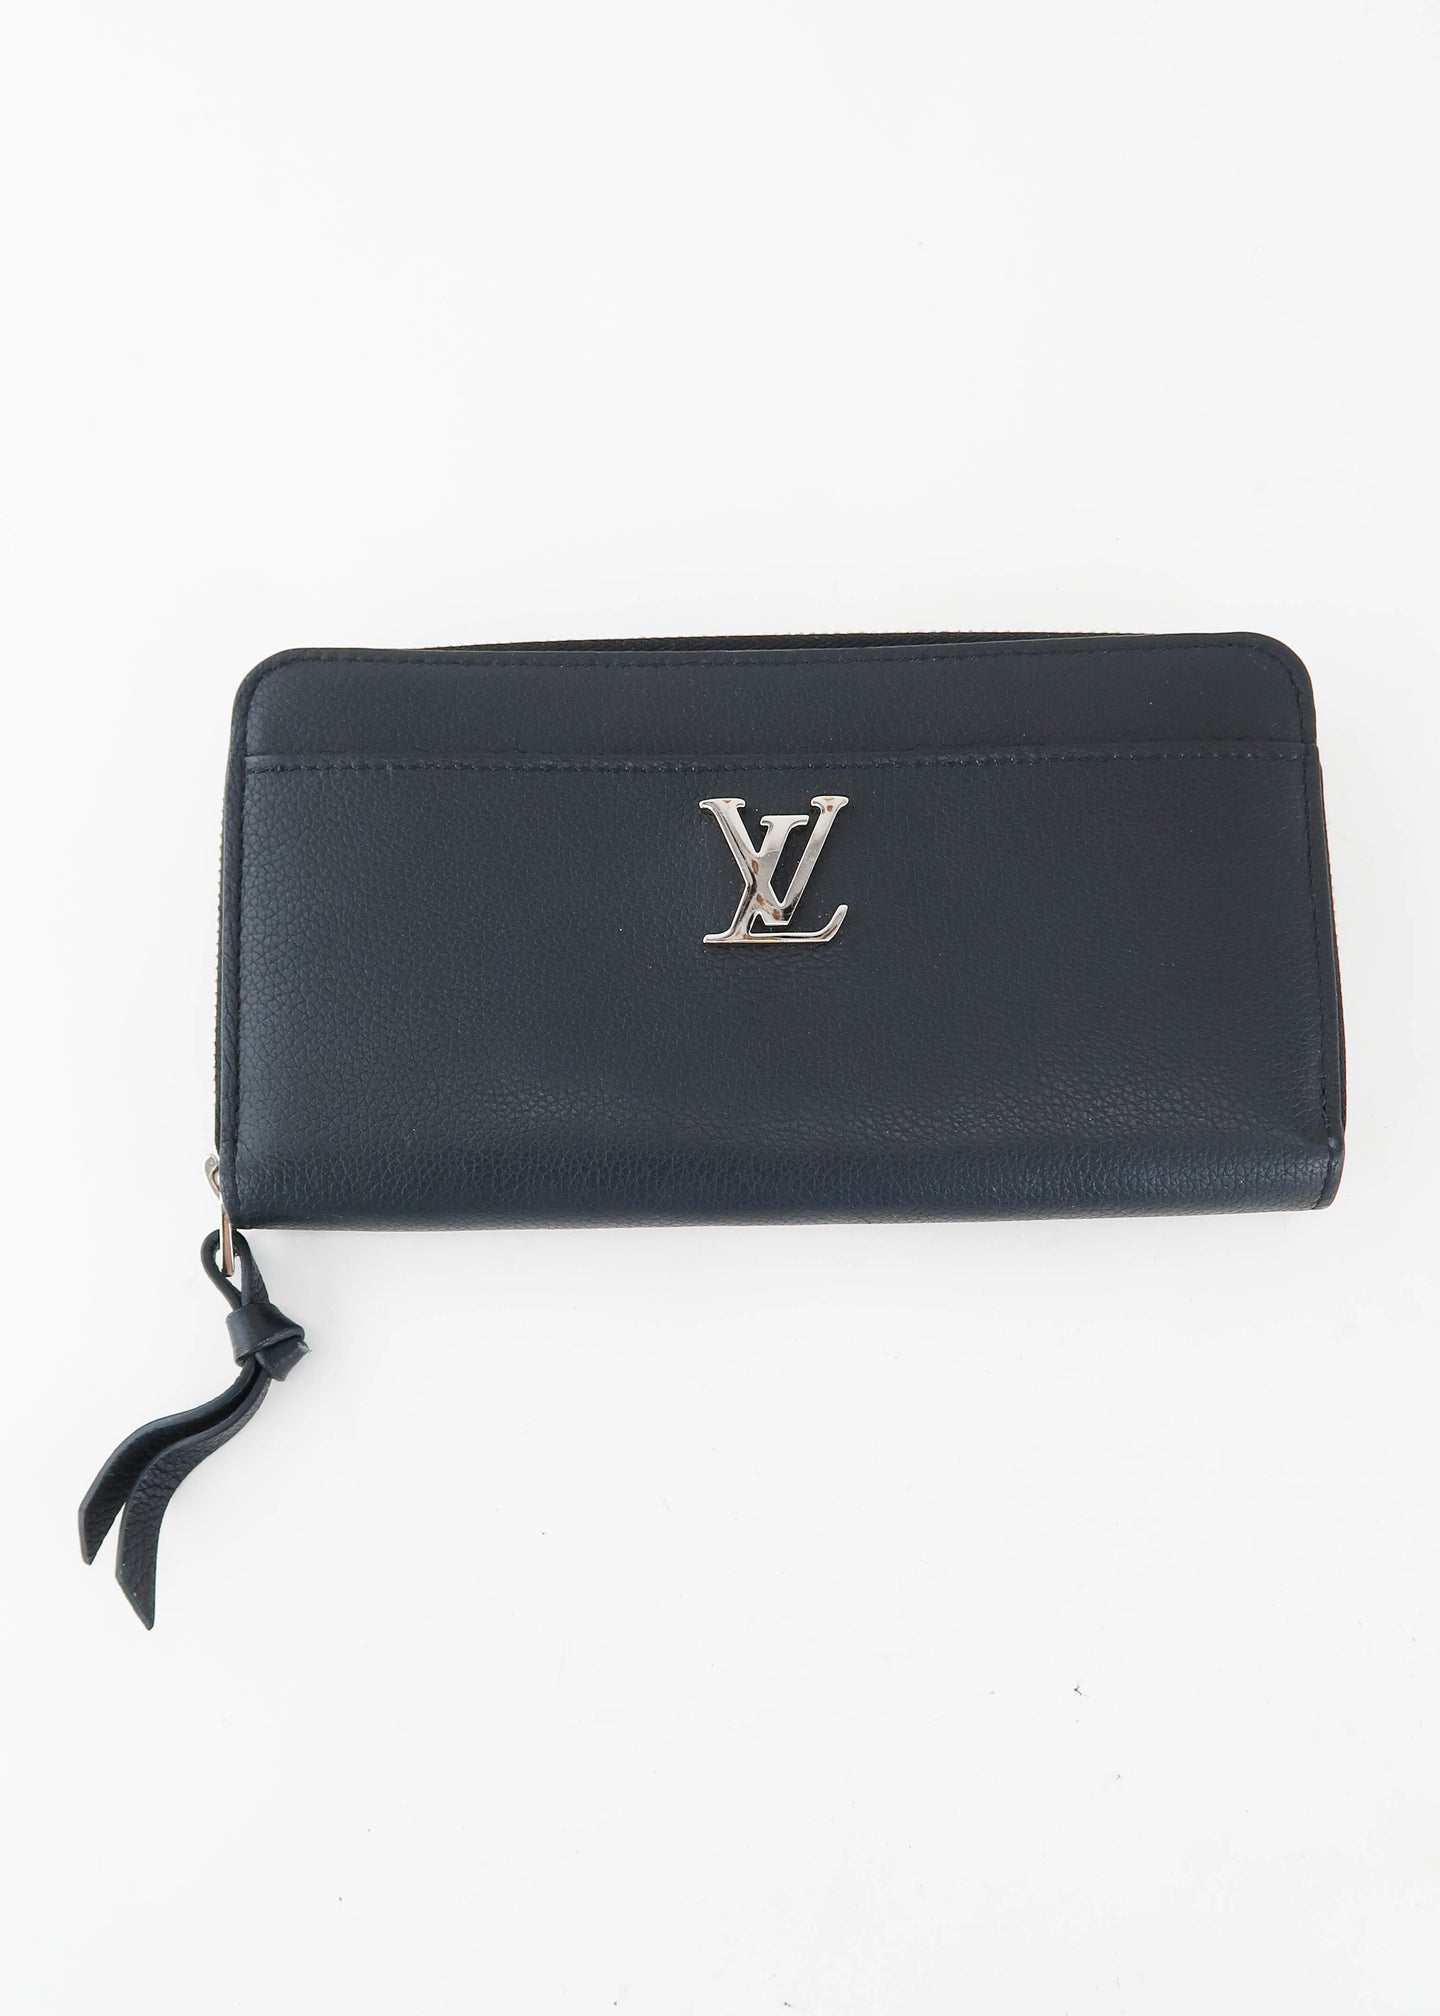 lv zippy wallet black